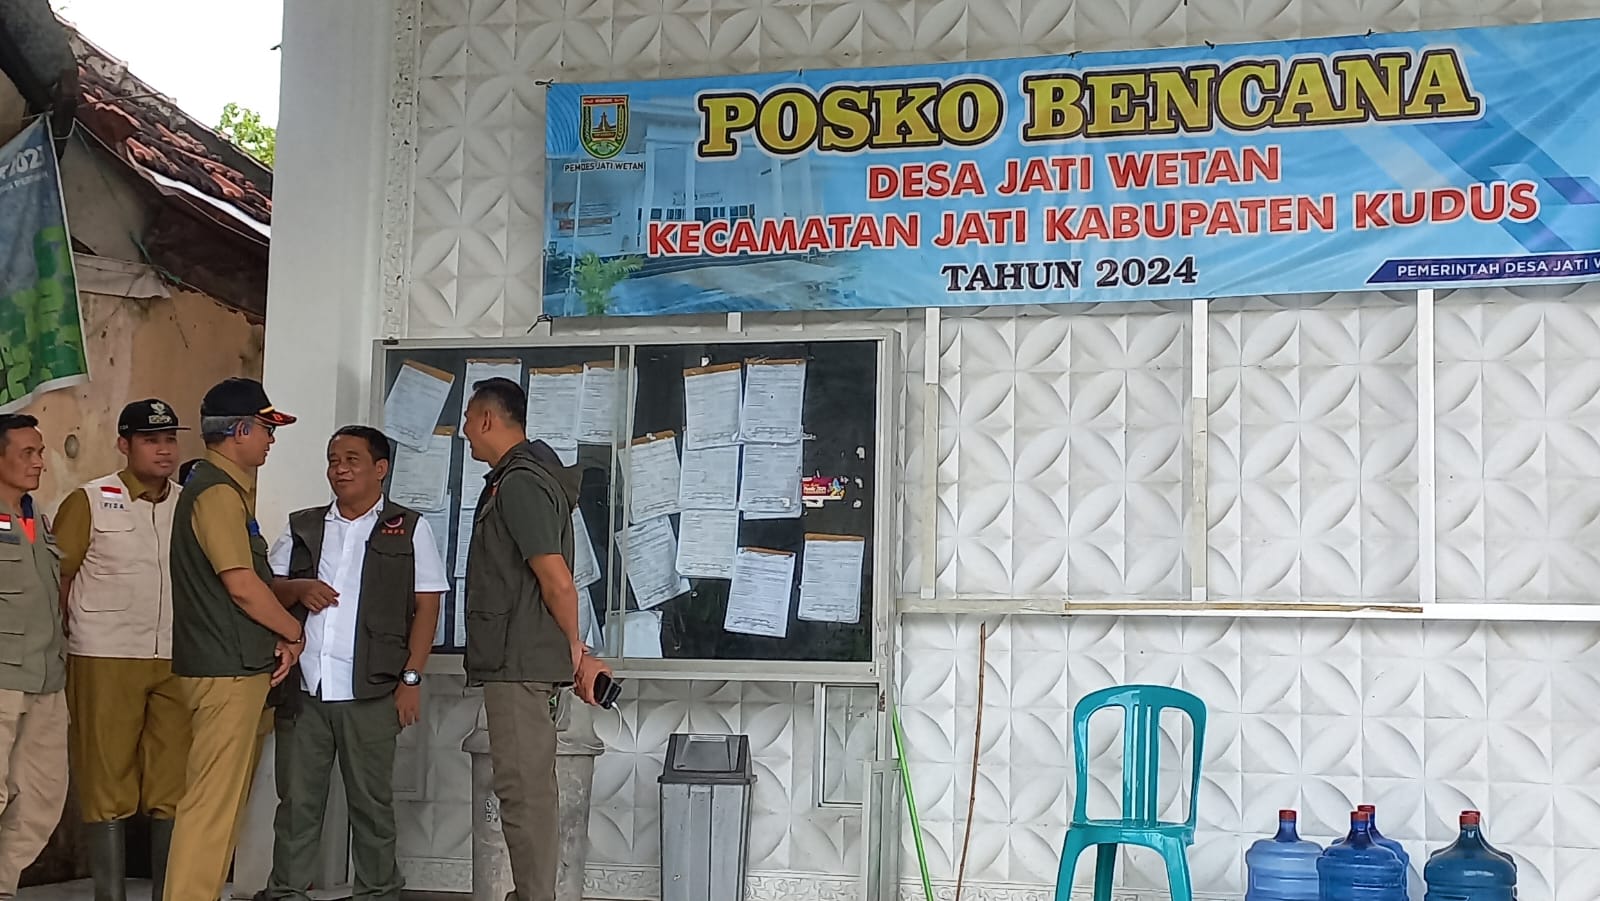 Posko Bencana Desa Jati Wetan di Kabupaten Kudus (Sinpo.id/BNPB)